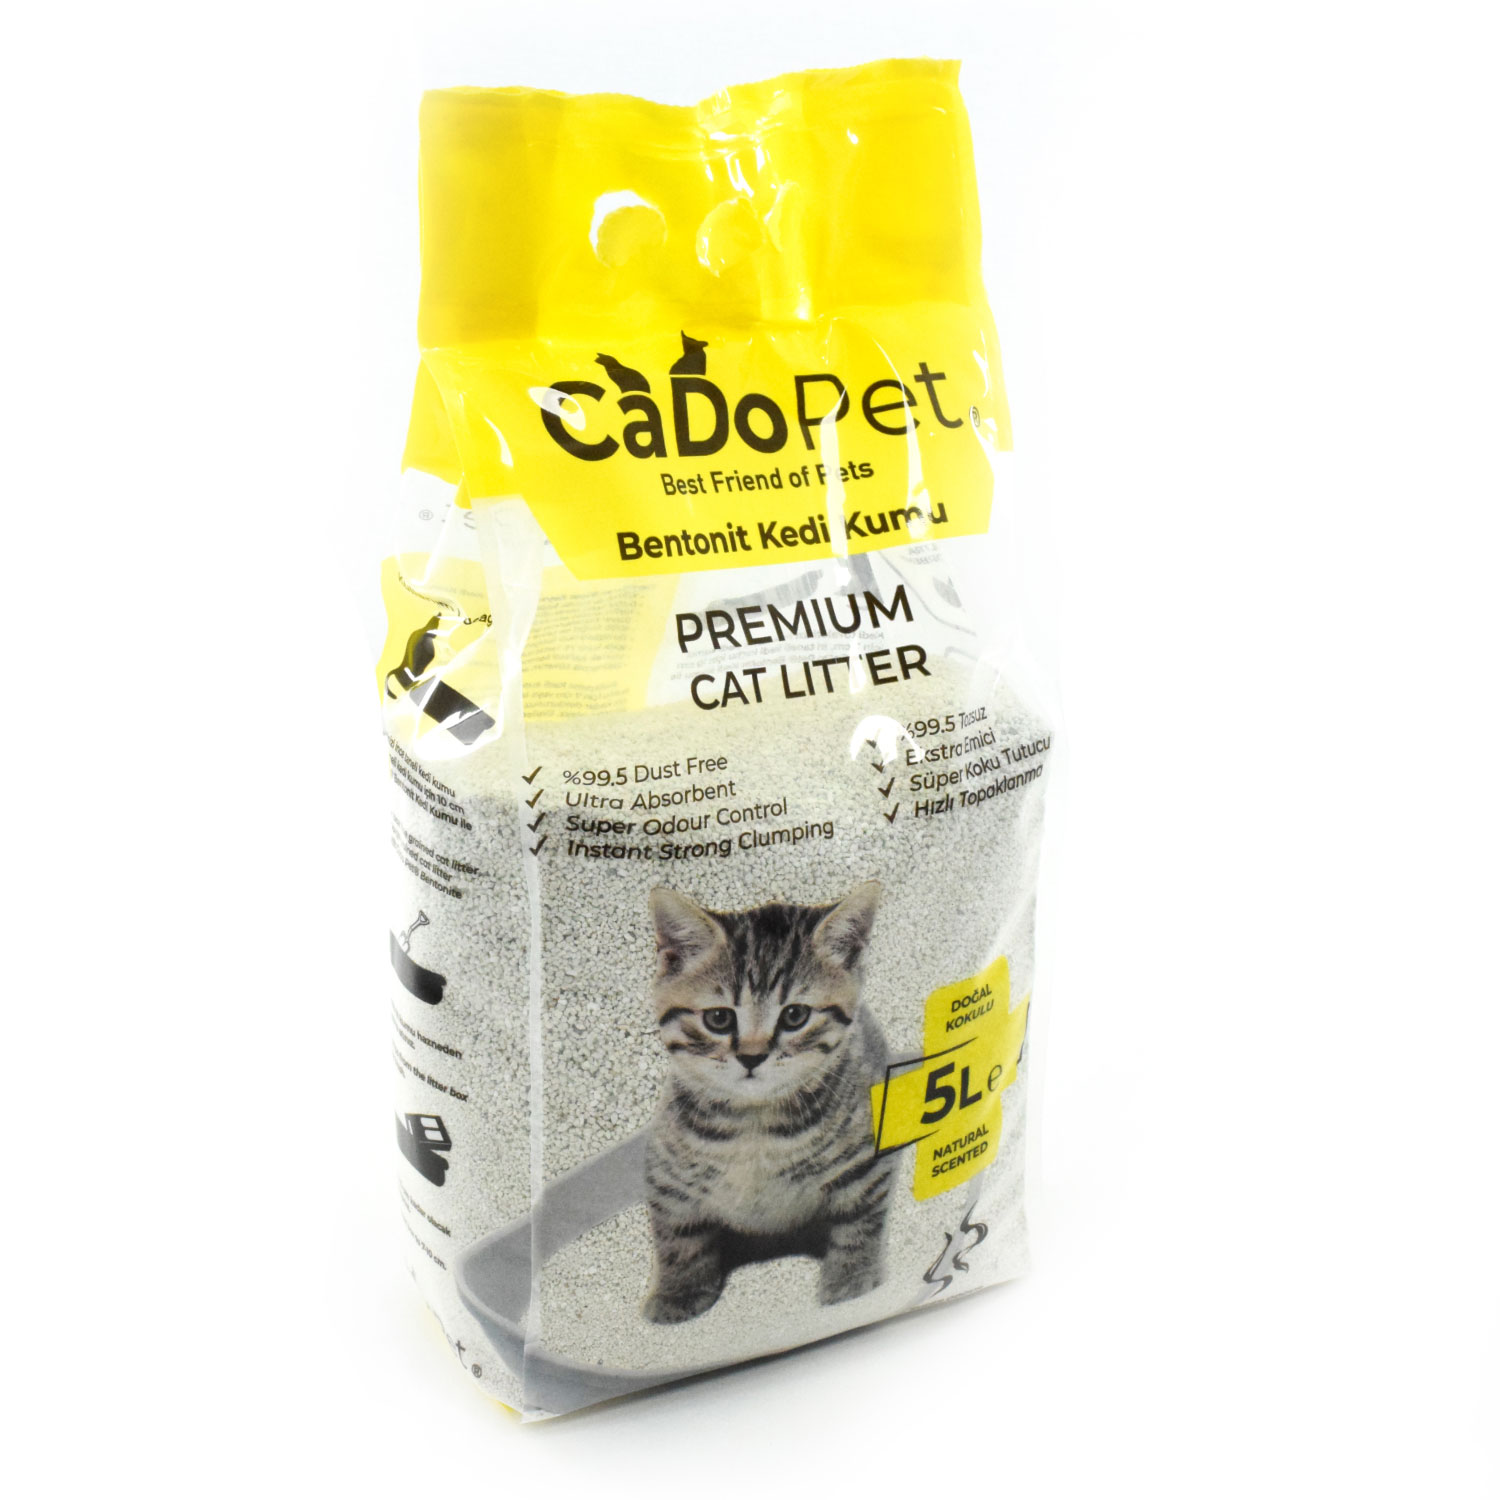 .Cat Litter with Natural Premium 5L.